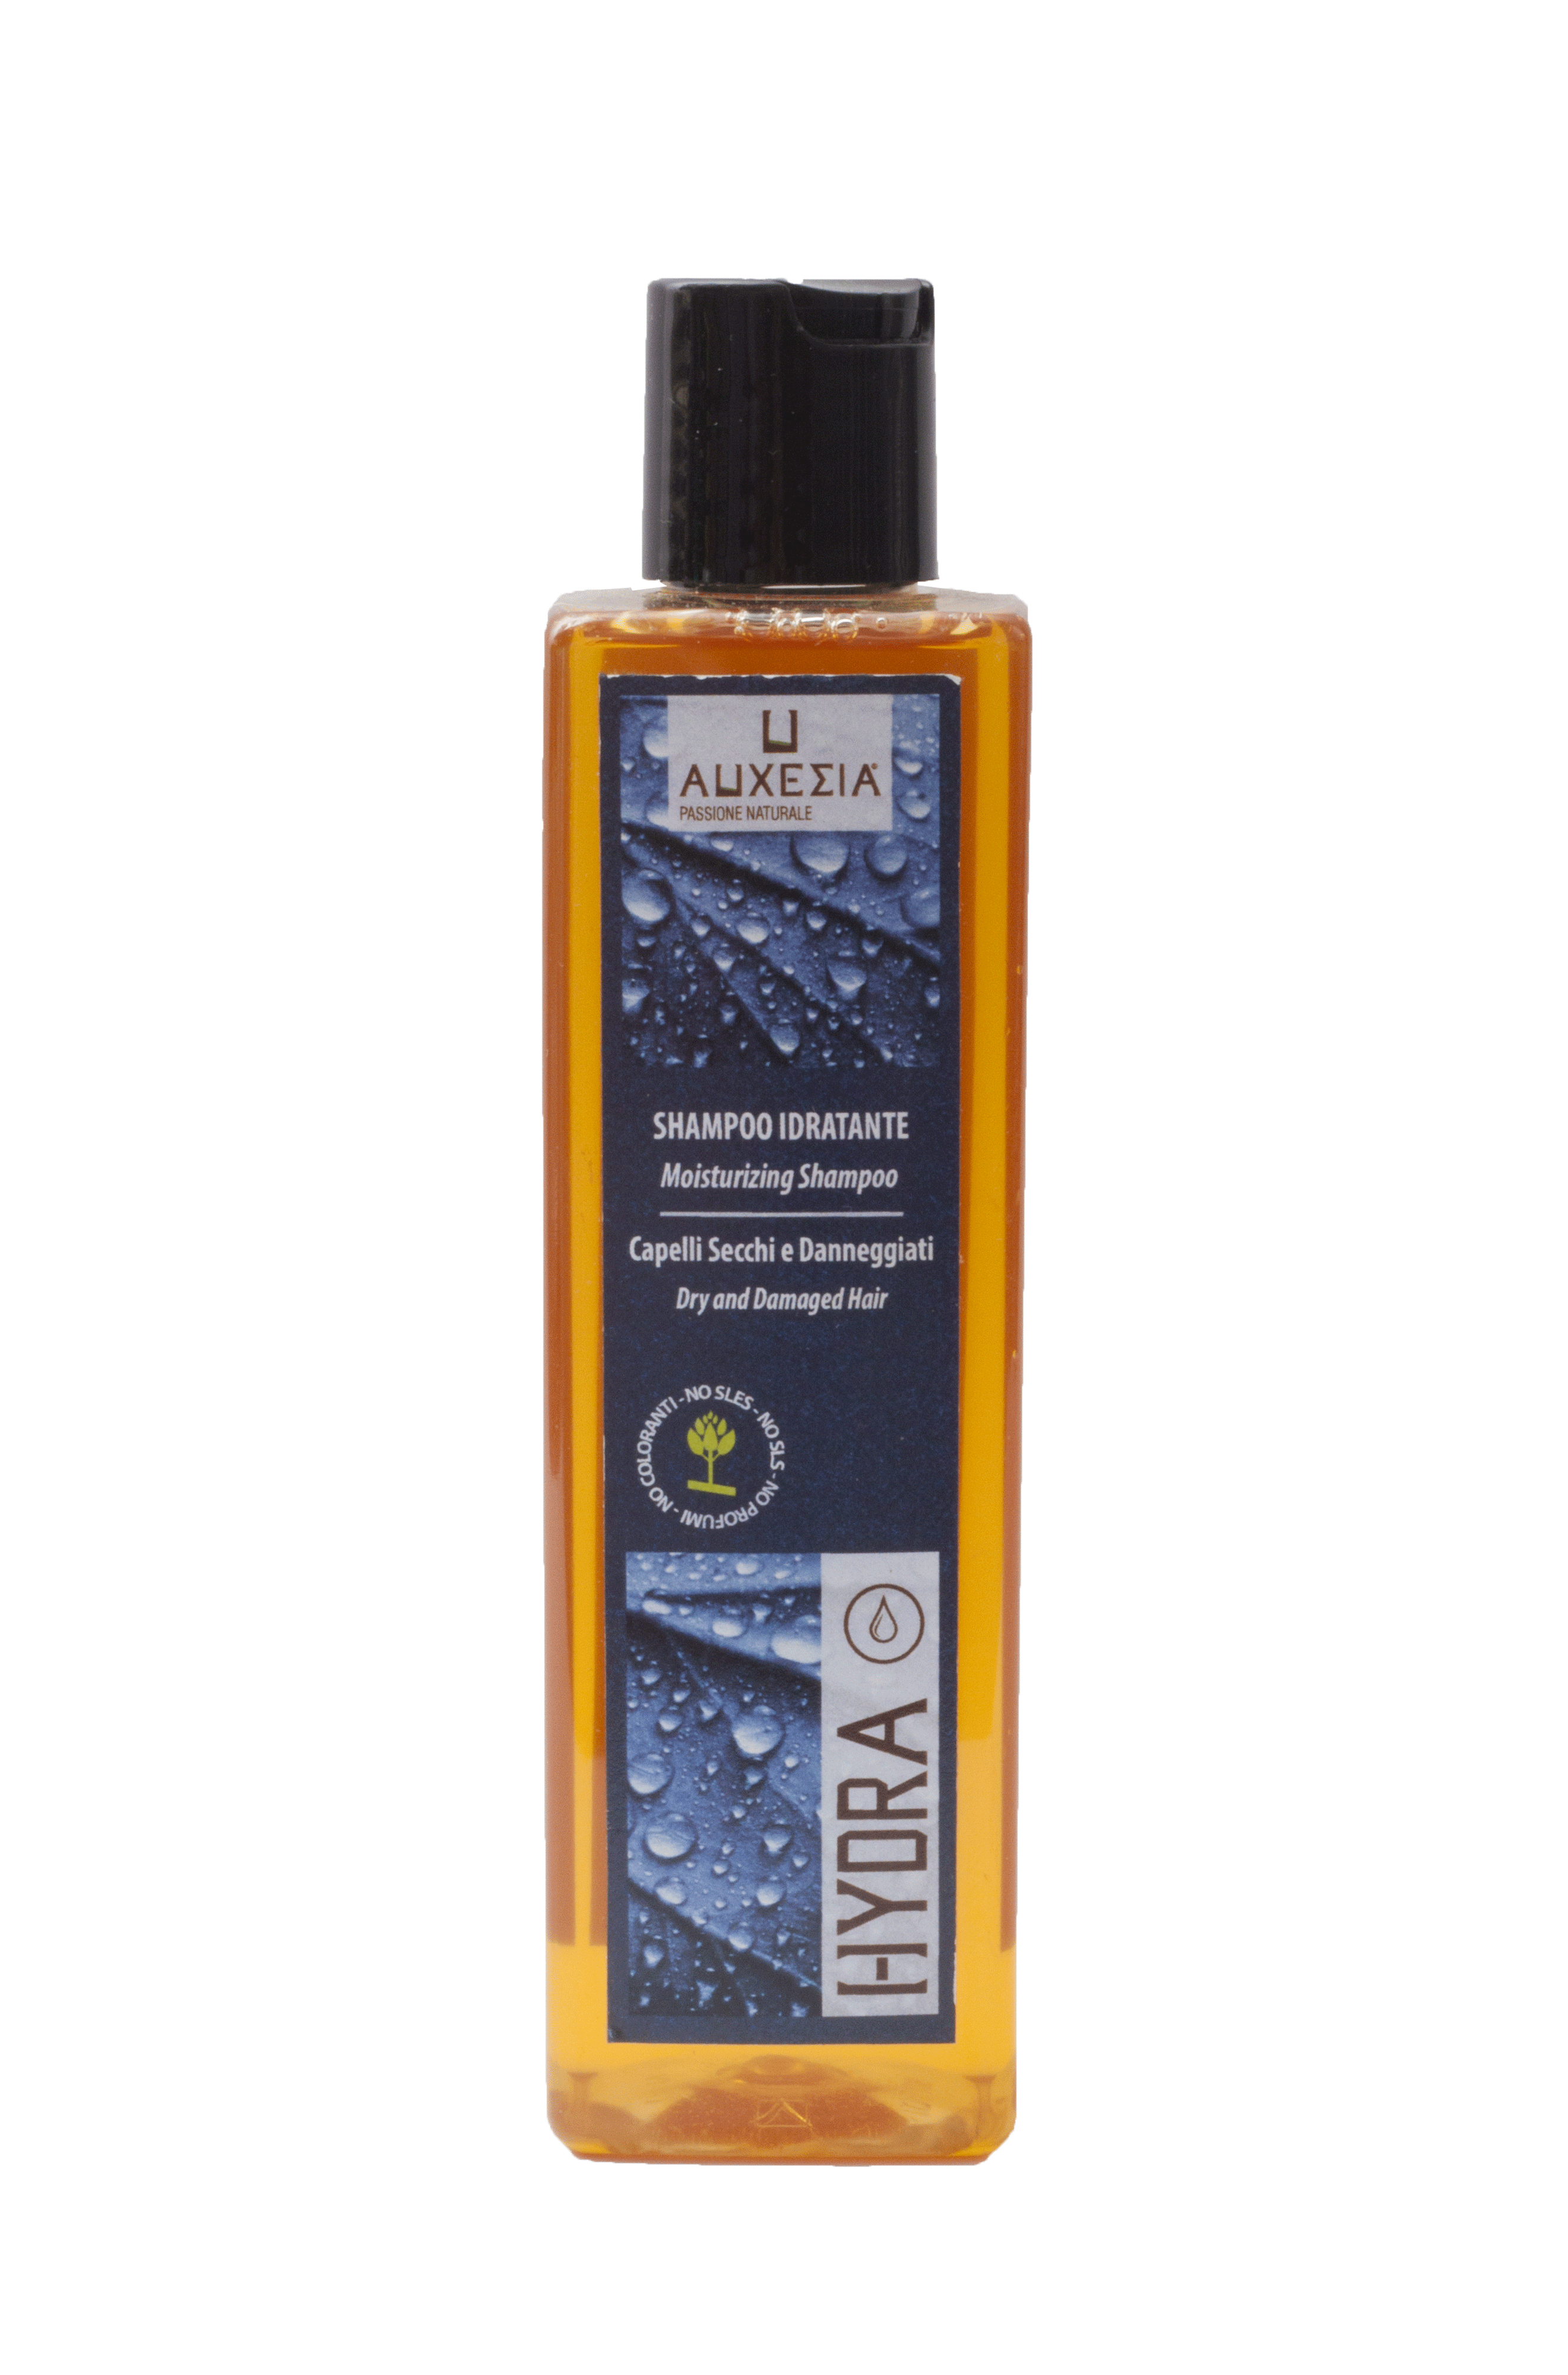 Auxesia Hydra Shampoo Idratante 250 ml